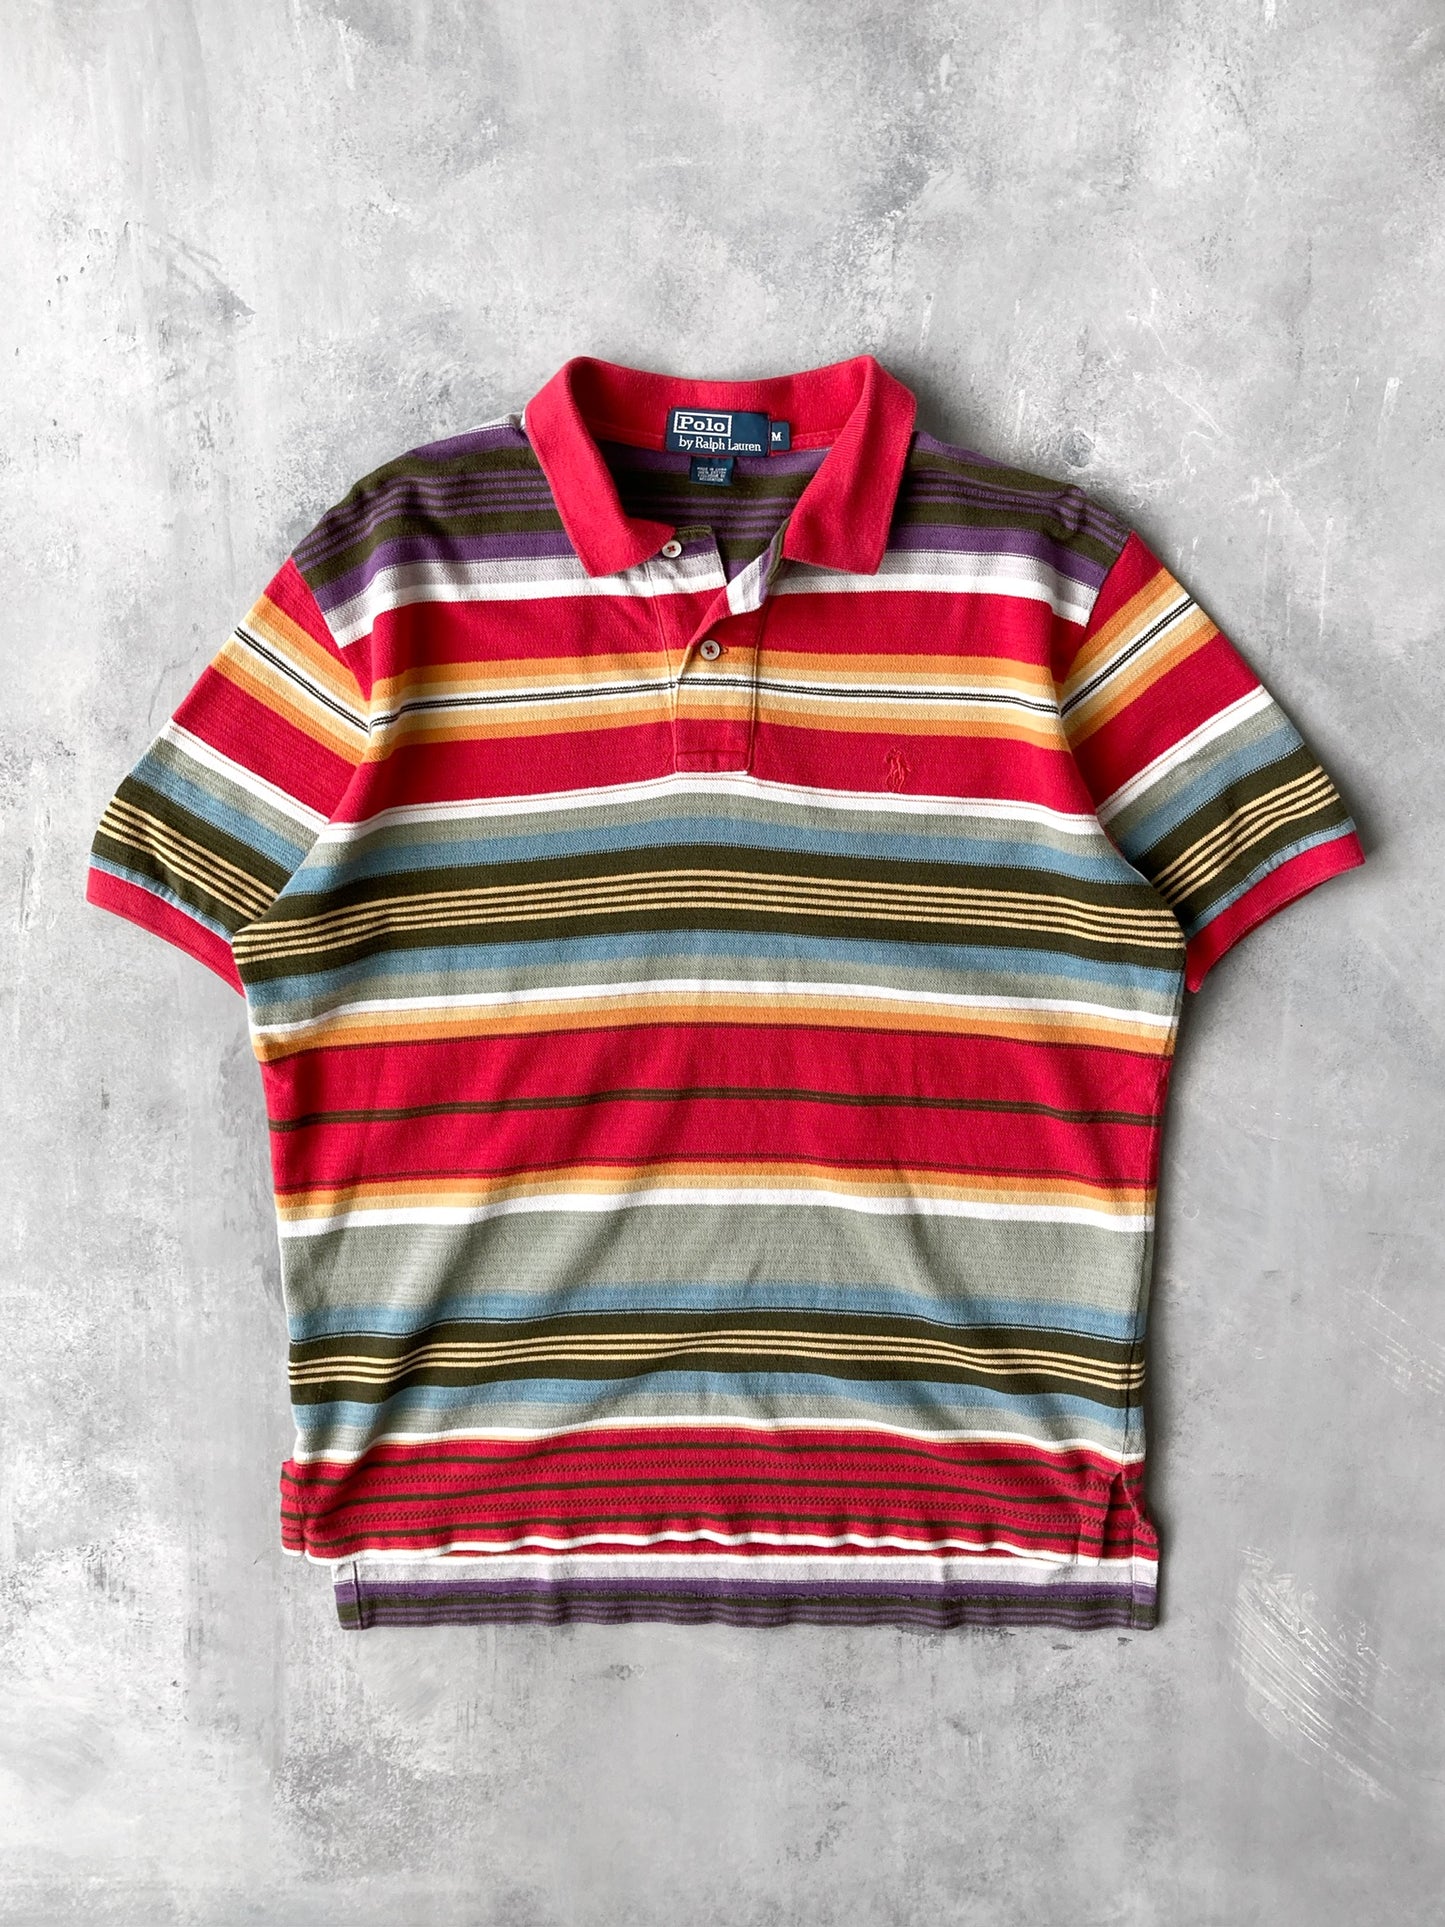 Polo Ralph Lauren Polo Shirt 90's -  Medium / Large